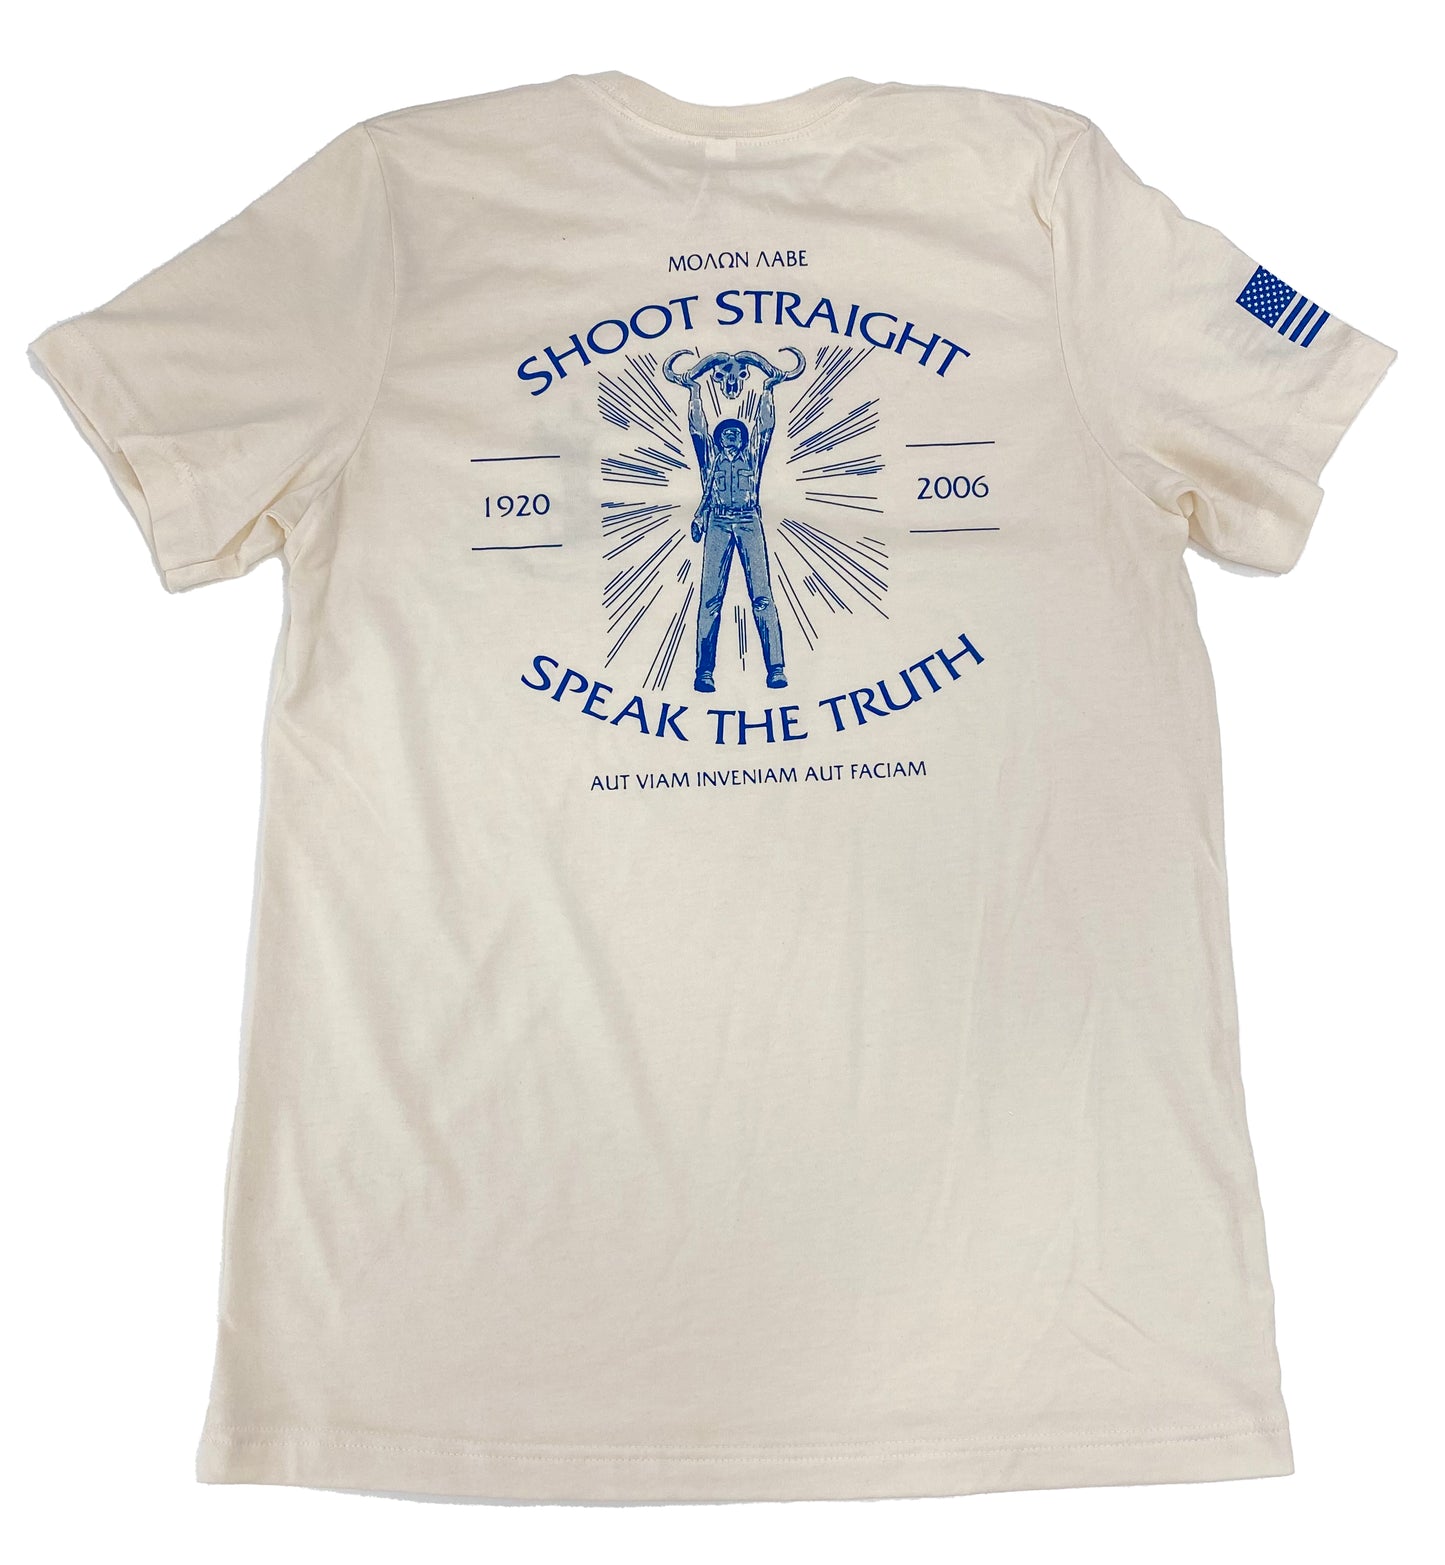 Shoot Straight/Speak the Truth T-Shirt White